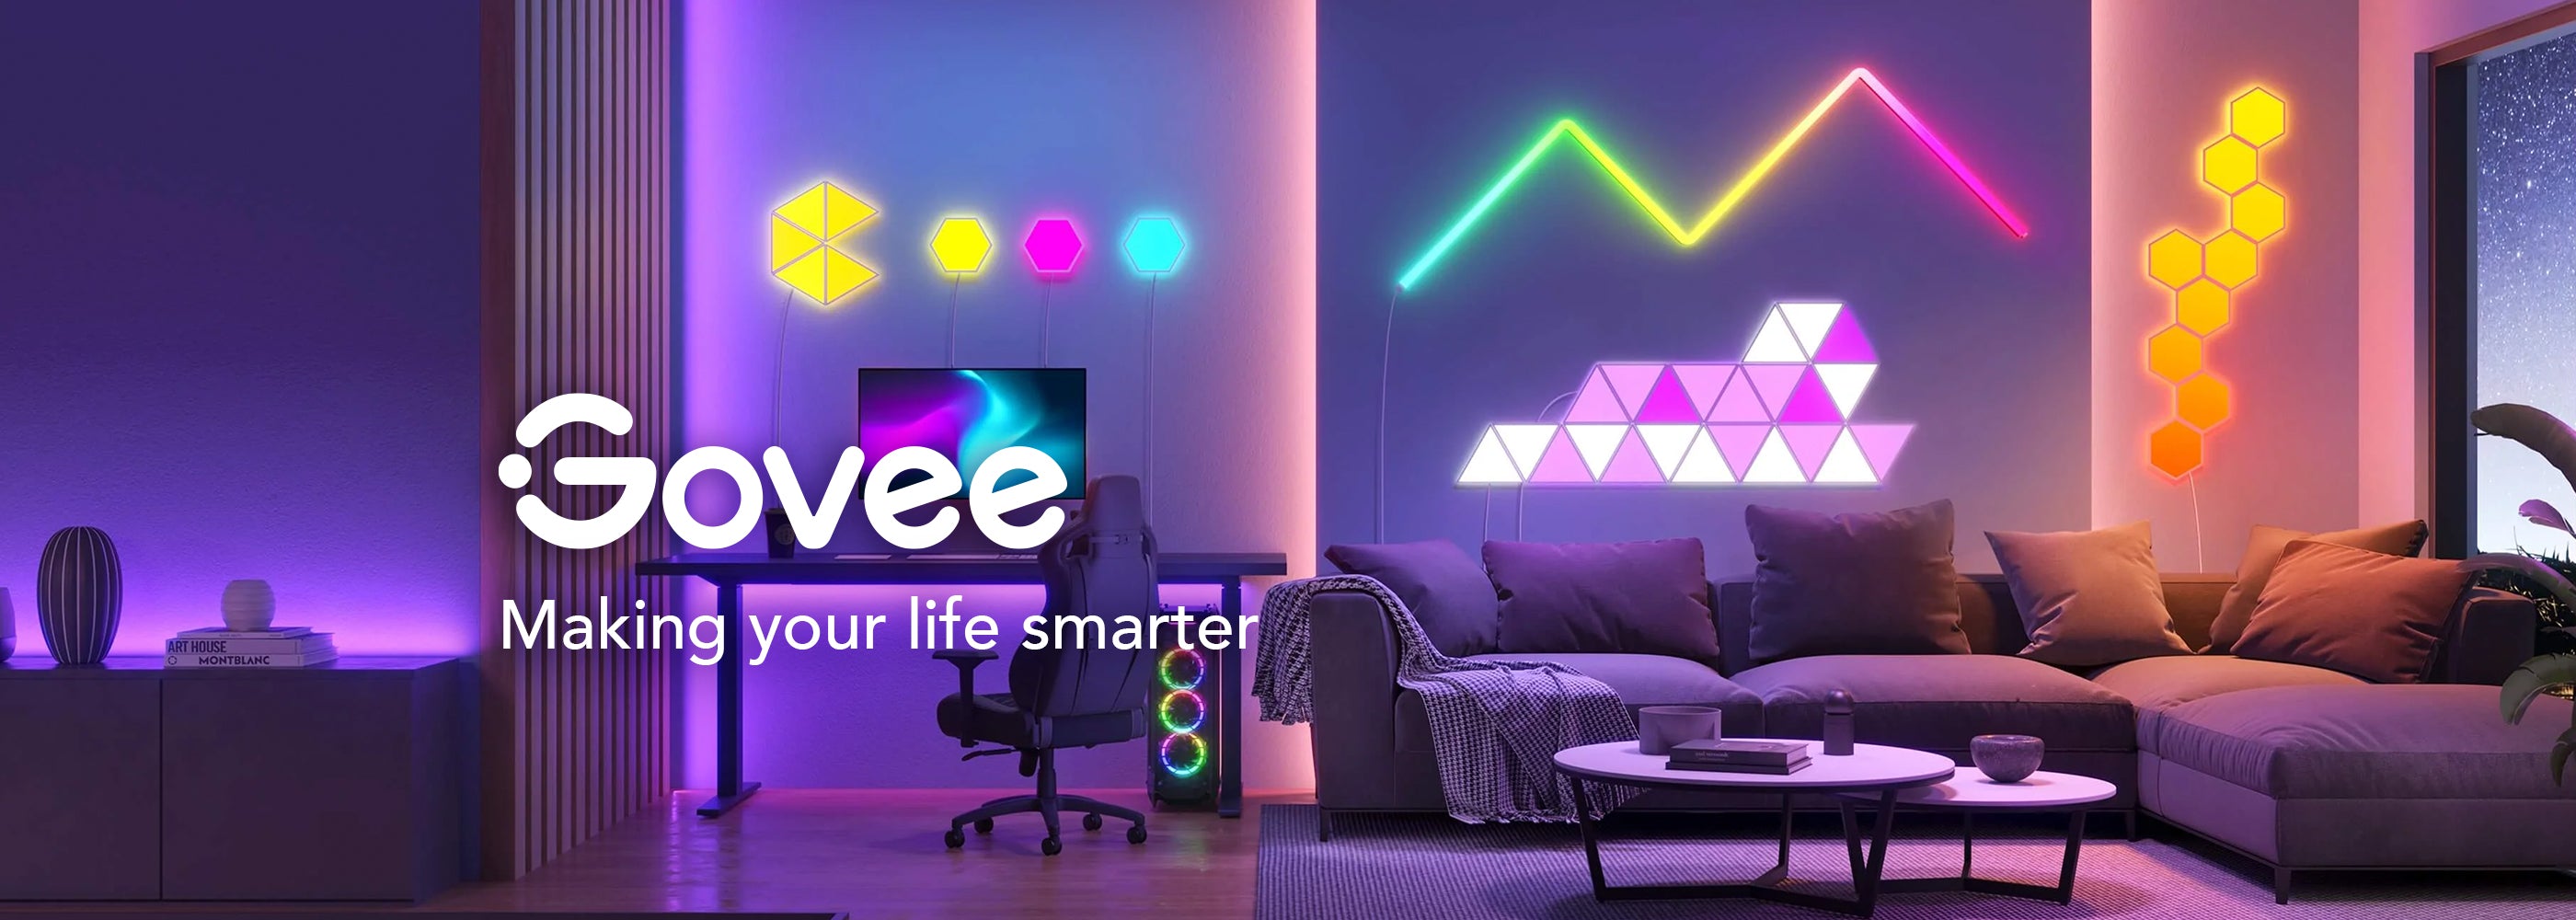 Govee - Making Your Life Smarter – EU-GOVEE